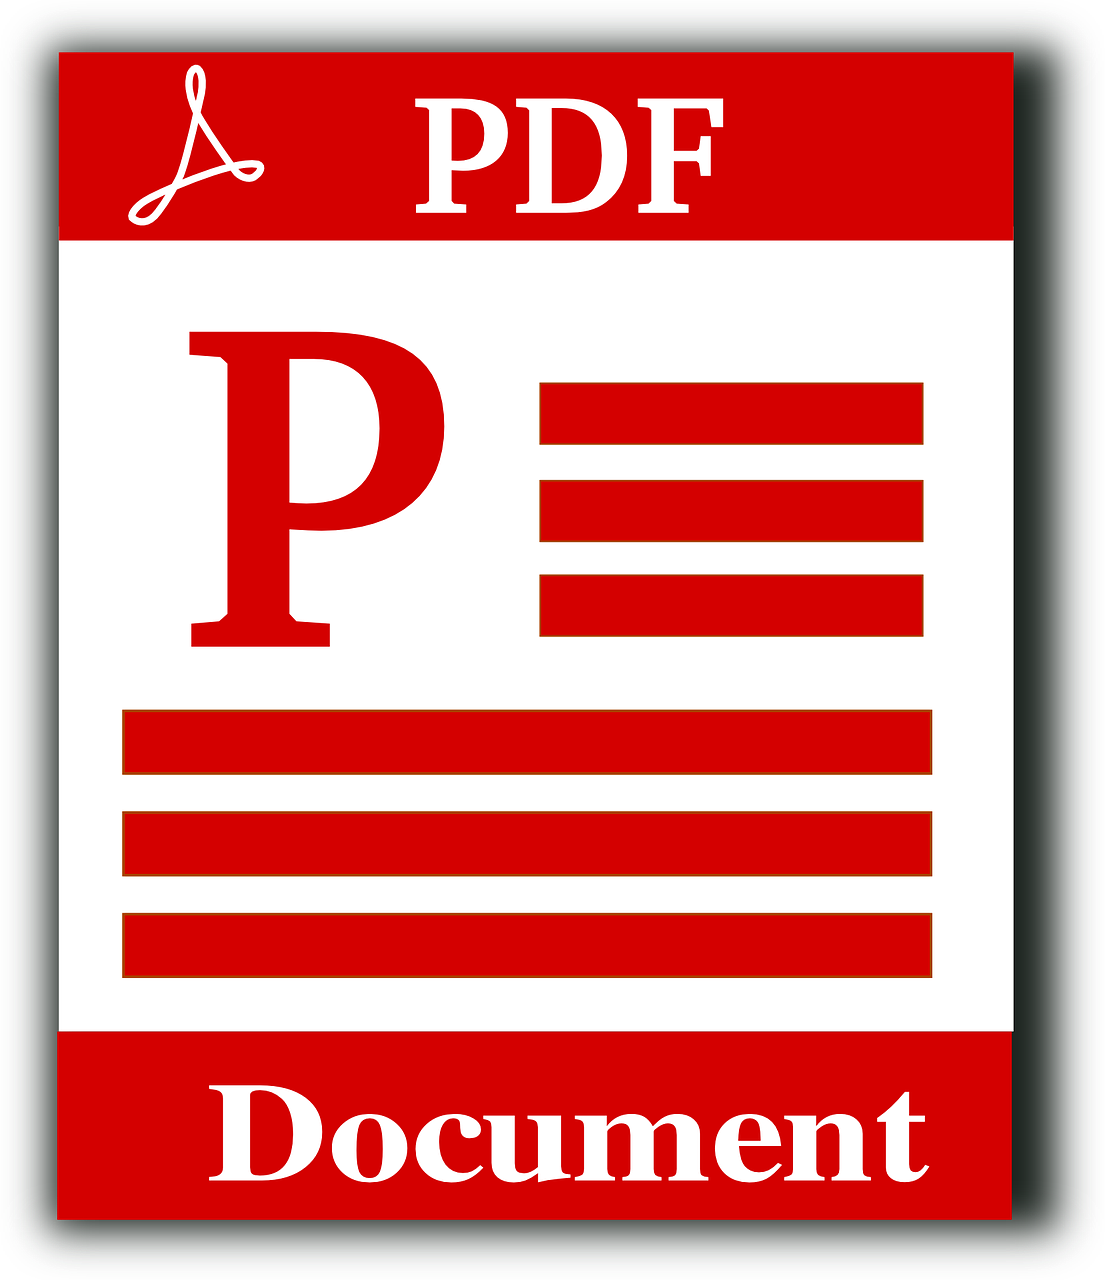 Pdf,document,icon,sign,file - free image from needpix.com